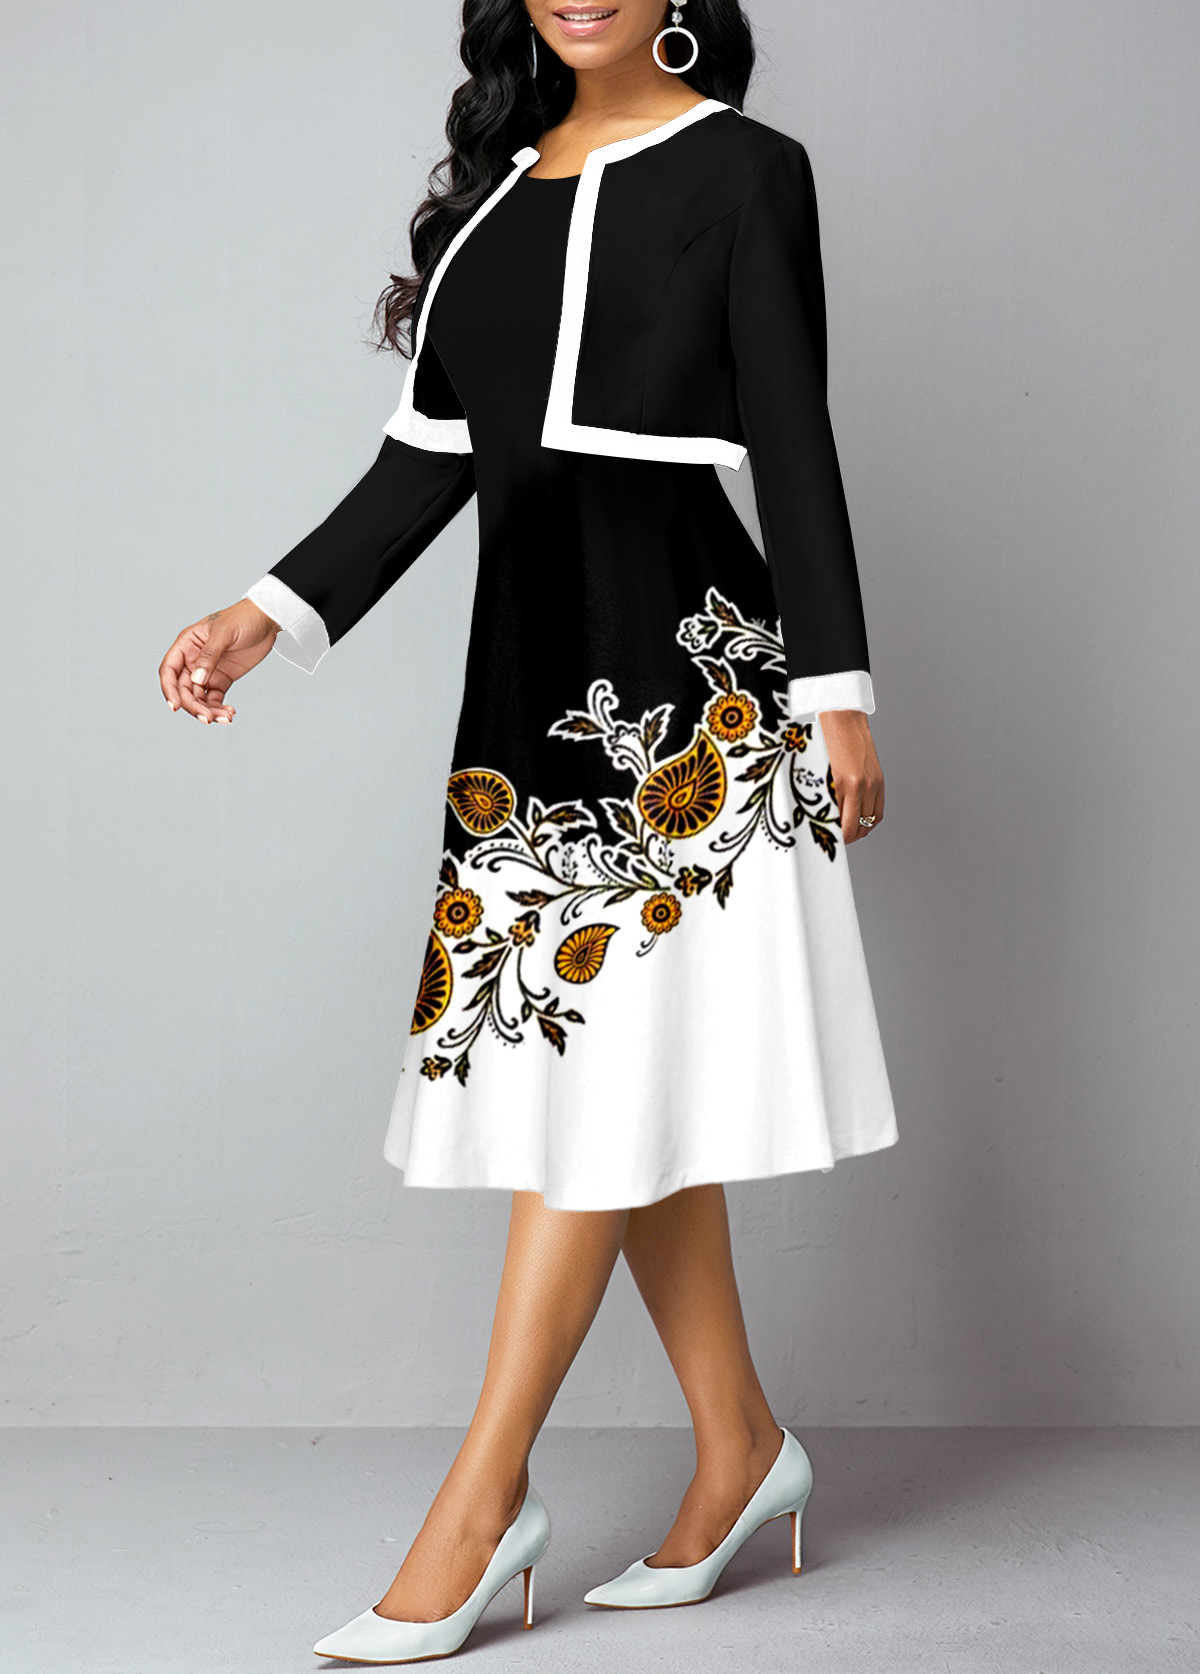 Black Long Sleeve Cardigan and Paisley Print Dress